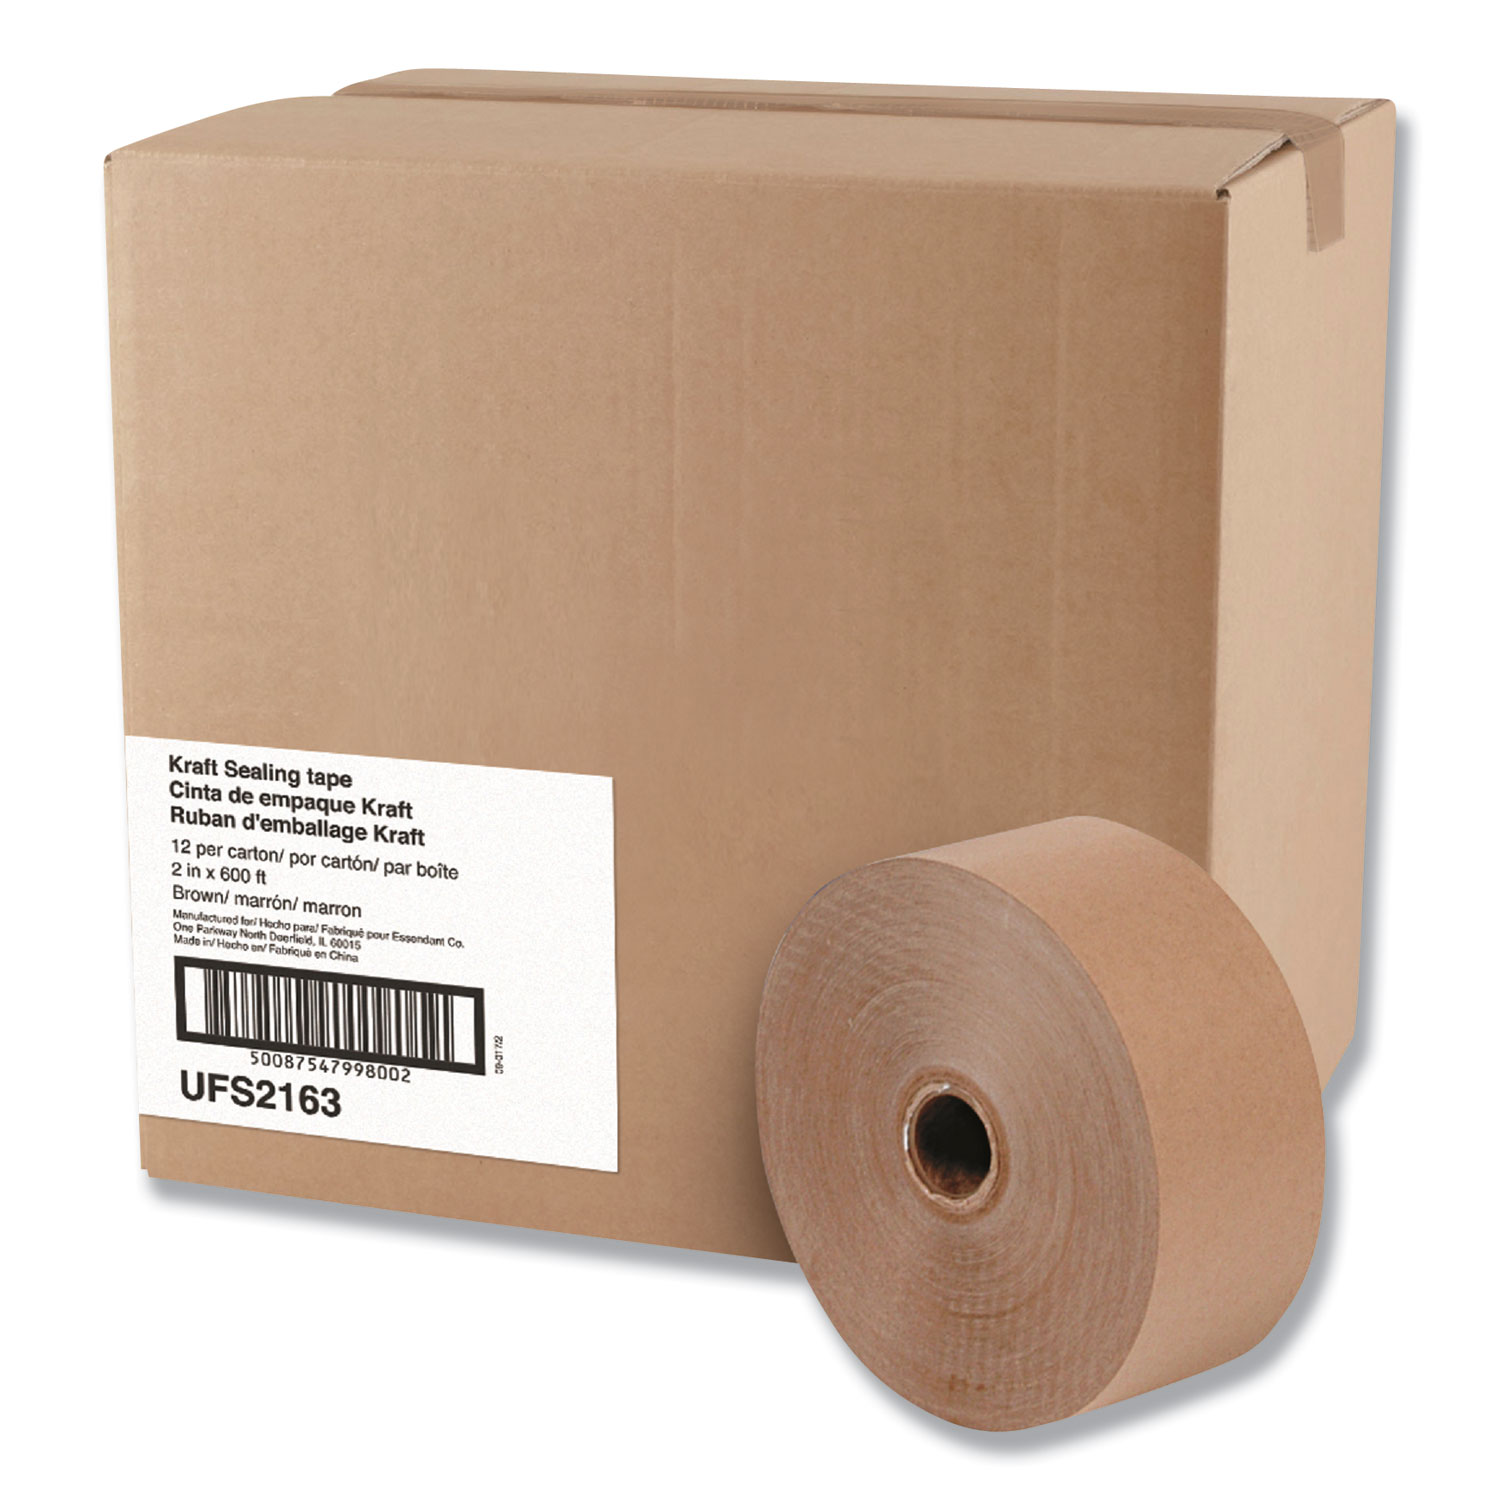  General Supply UFS2163 Gummed Kraft Sealing Tape, 3 Core, 2 x 600 ft, Brown, 12/Carton (UNV2163) 